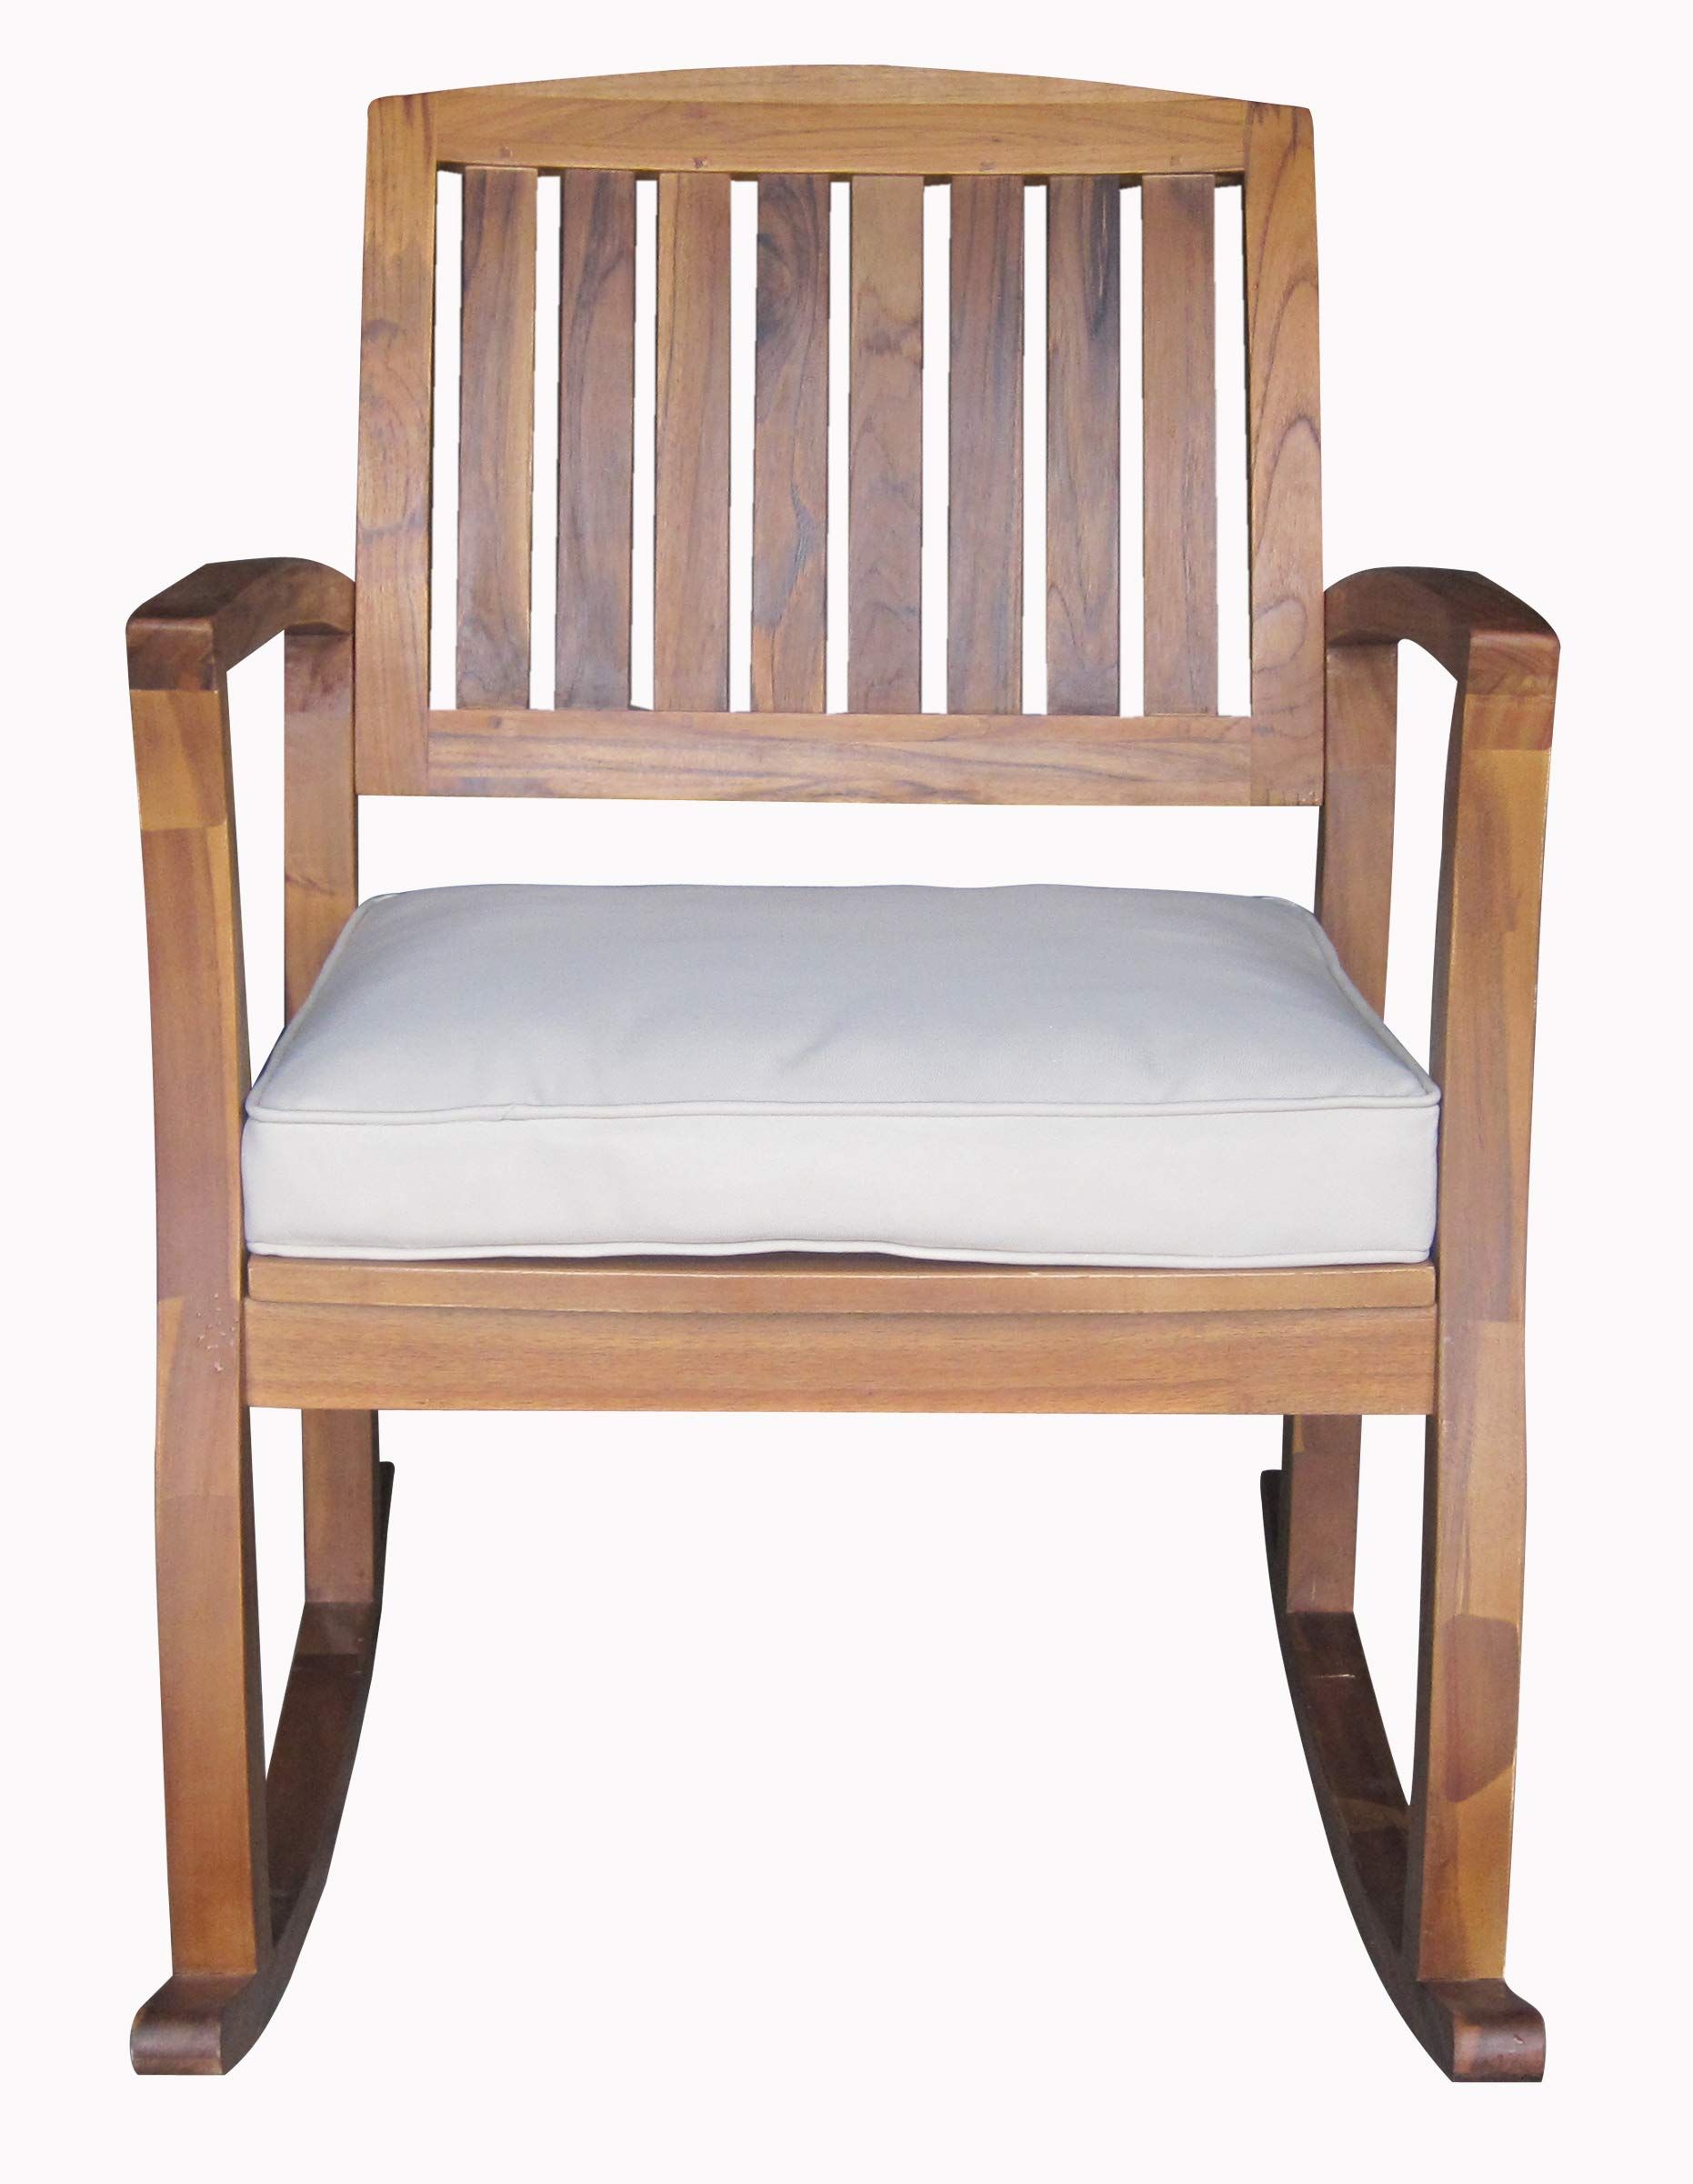 Christopher Knight Home Selma Acacia Rocking Chair with Cushion, Teak Finish | Amazon (US)